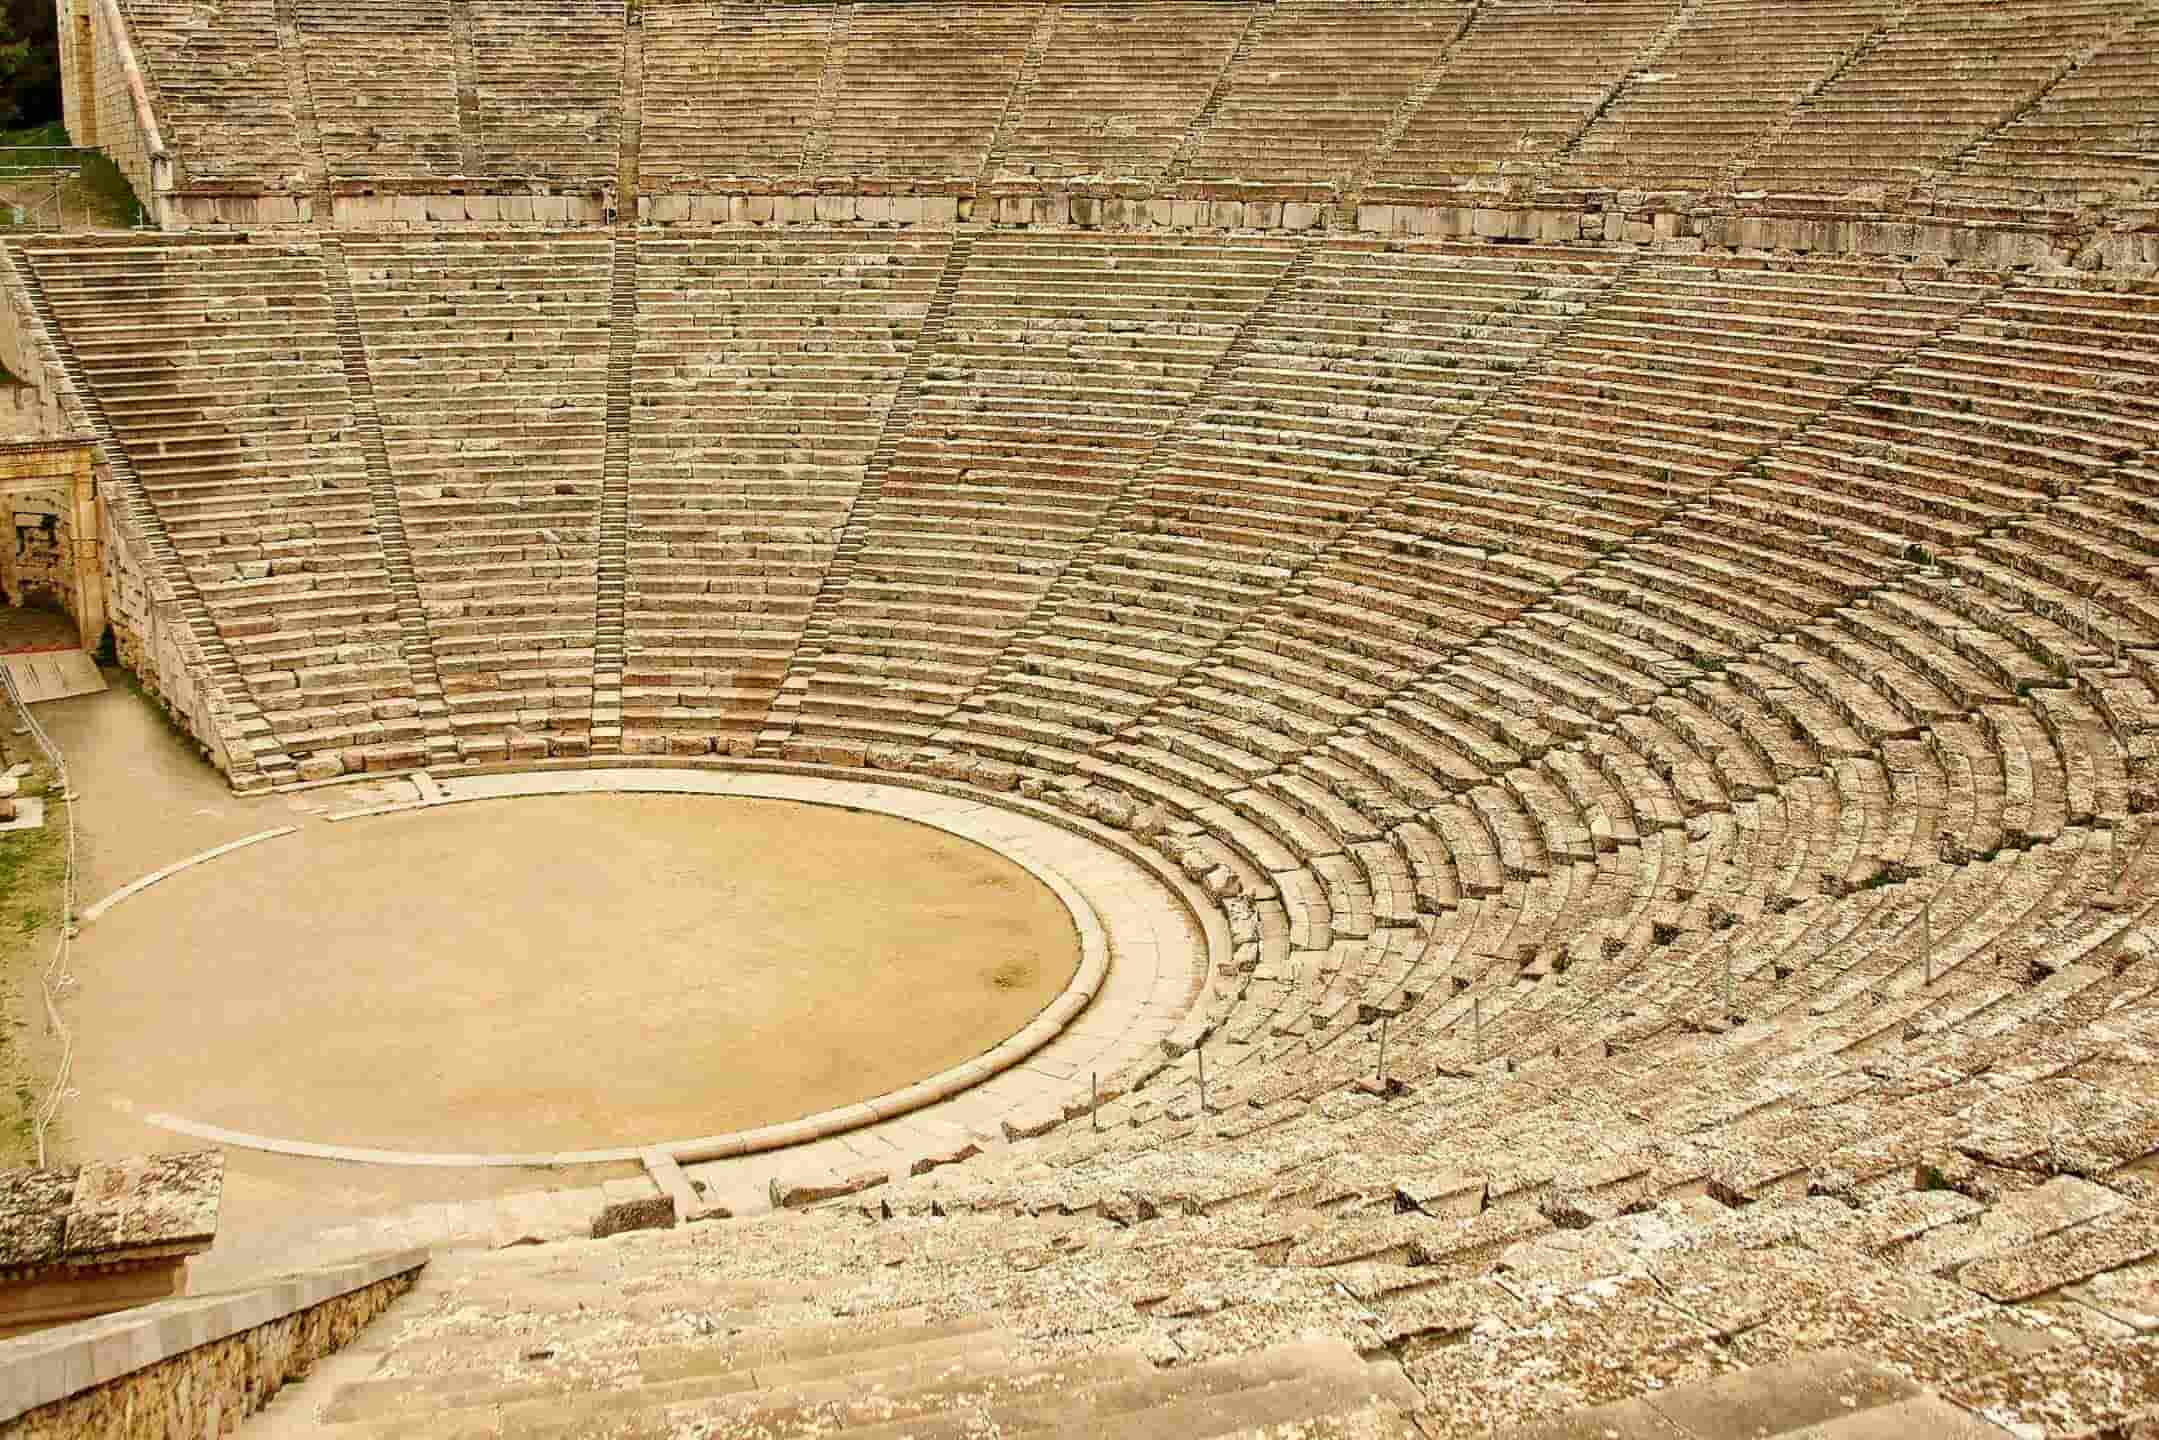 The Great Theater of Epidaurus